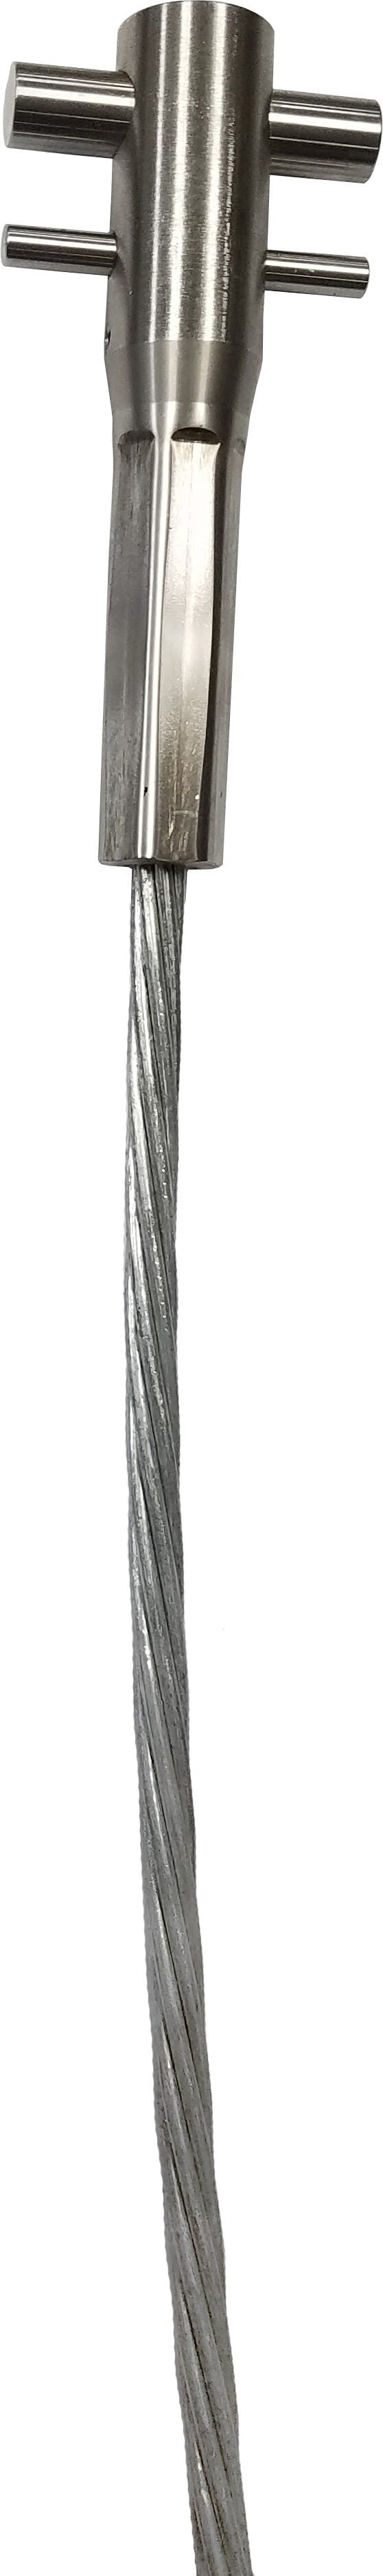 3M™ DBI-SALA® Lad-Saf™ Swaged Cable 6115006, 3/8 Inch, Galvanized Steel, 20 m_0